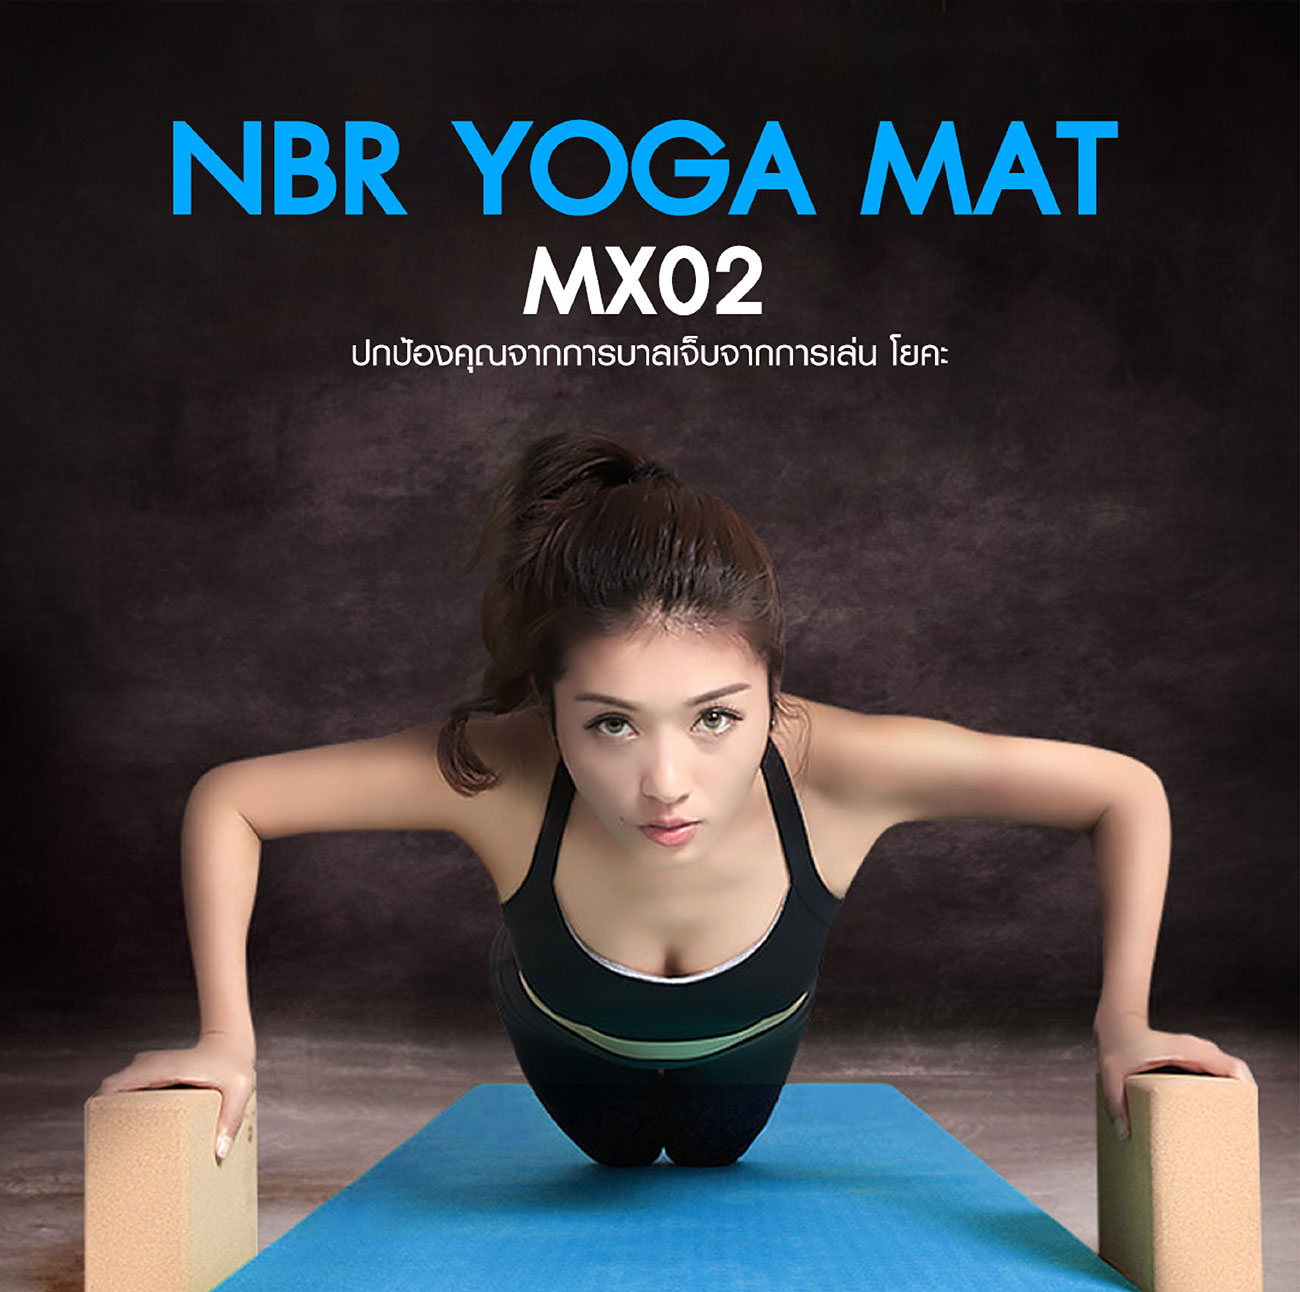 NBR yoga mat MX02